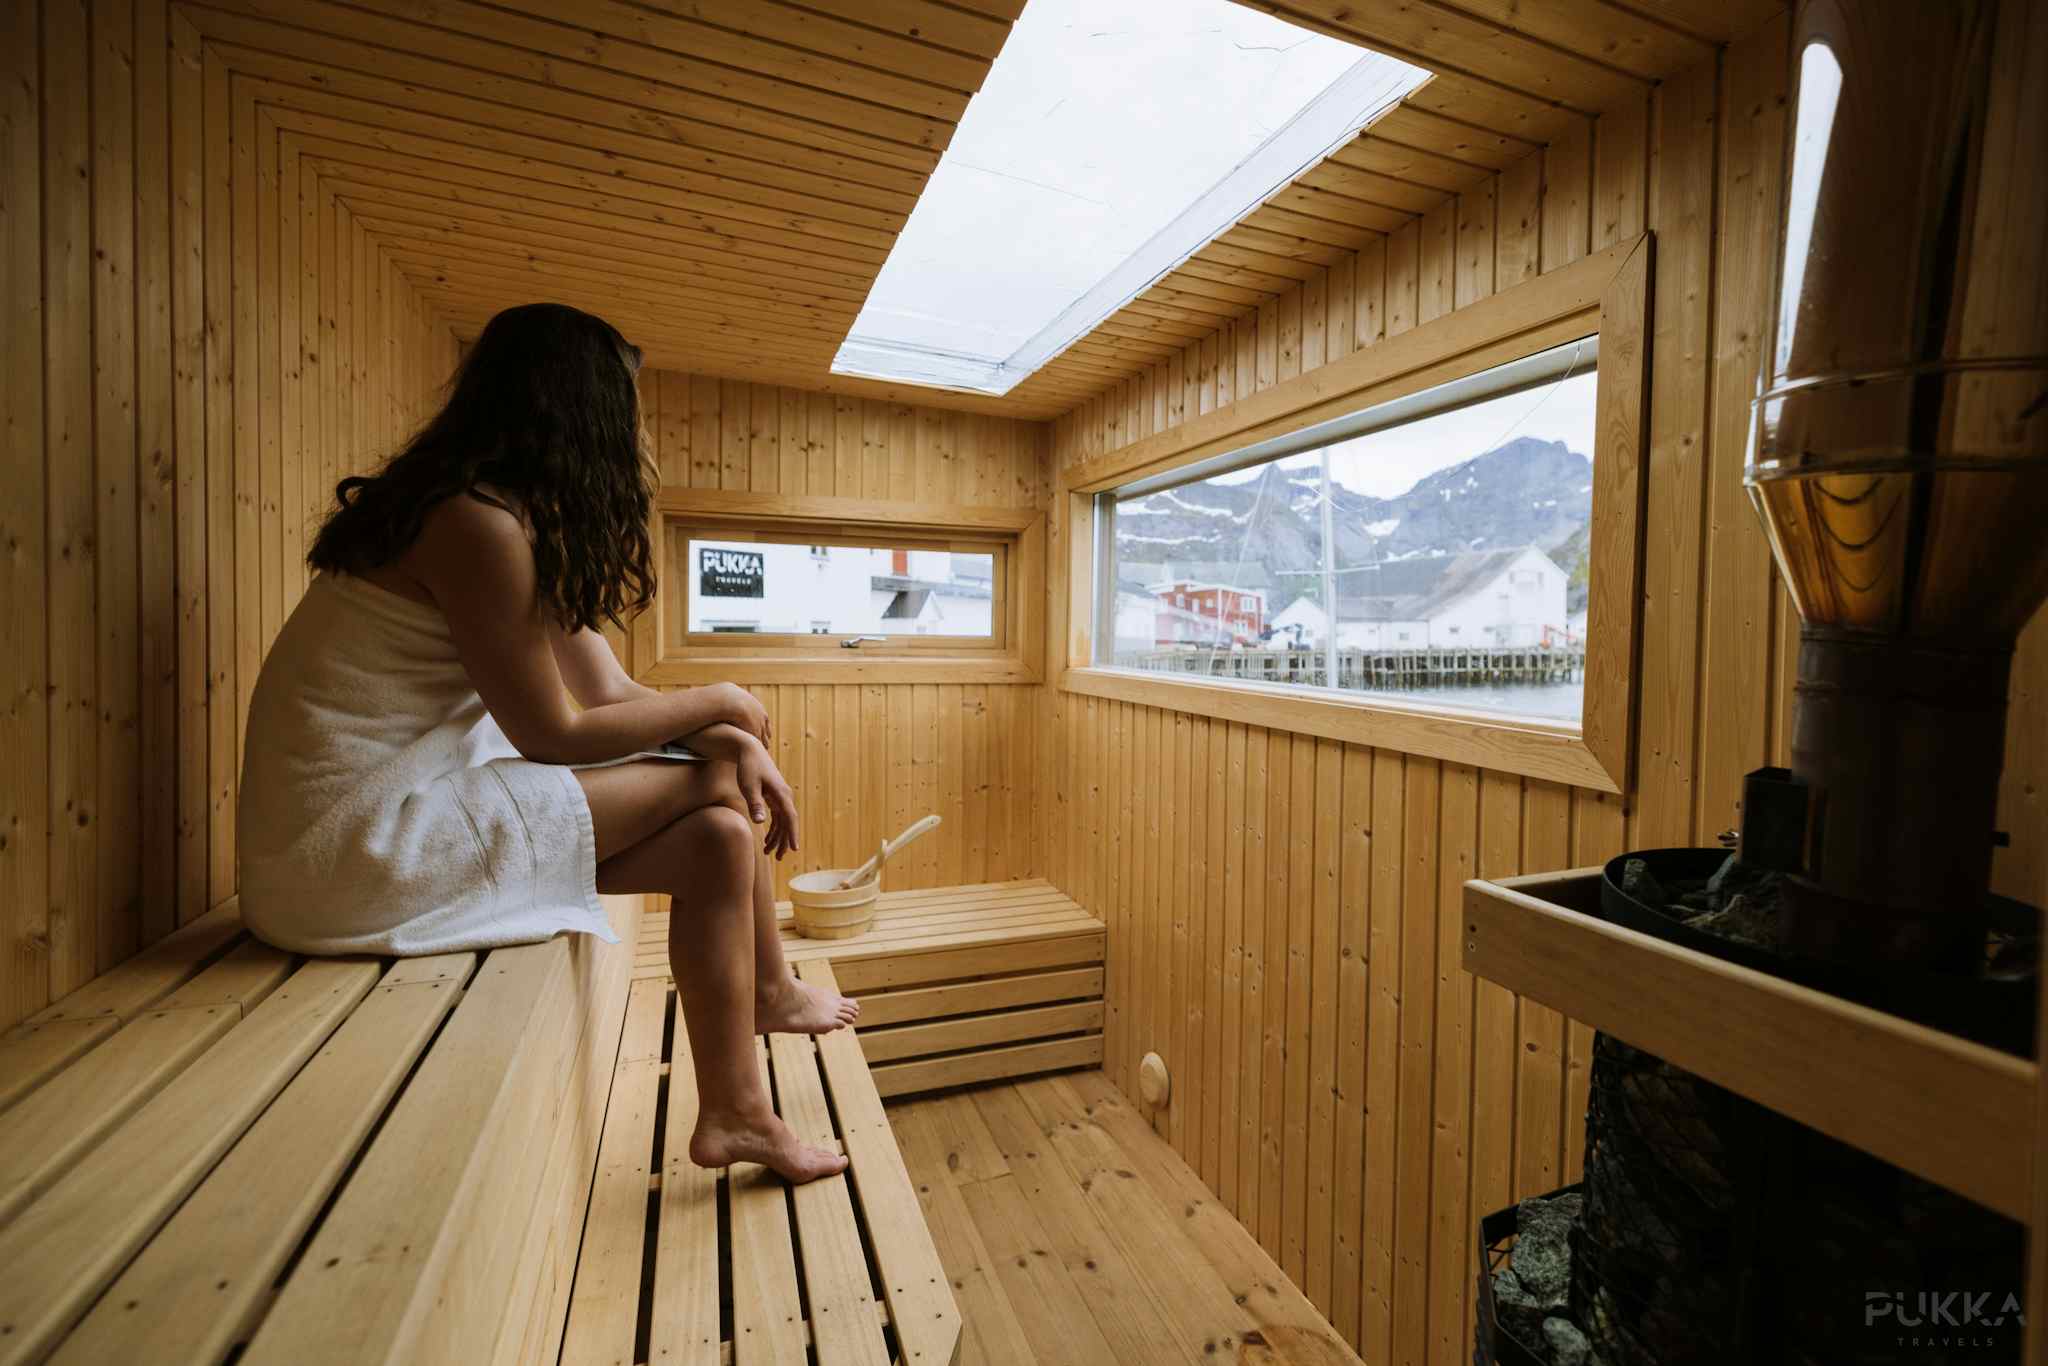 Sauna, Lofoten Islands
Host image: Pukka Travels